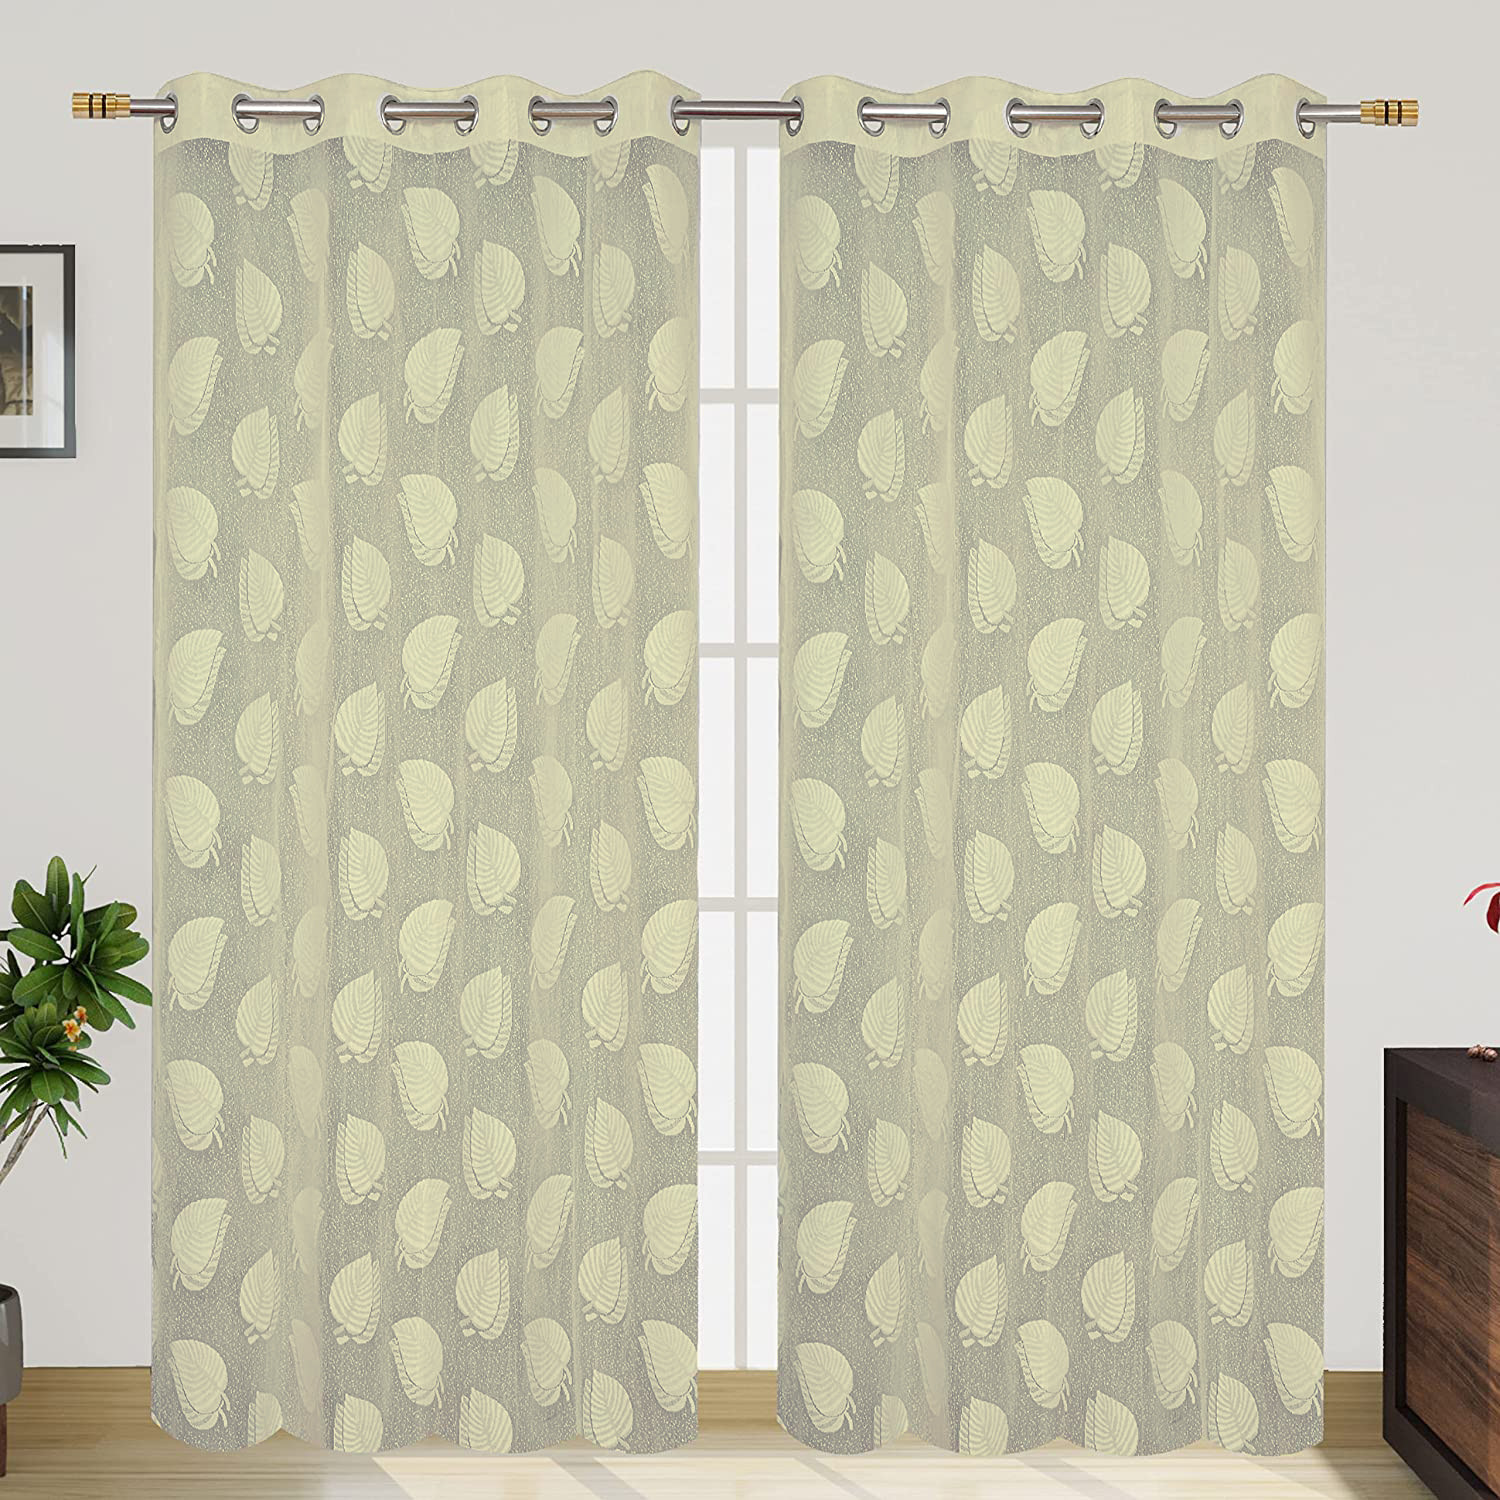 Kuber Industries Leaf Print Home Decor Cotton Door Curtain With 8 Eyeletss, 7 Feet (Cream)